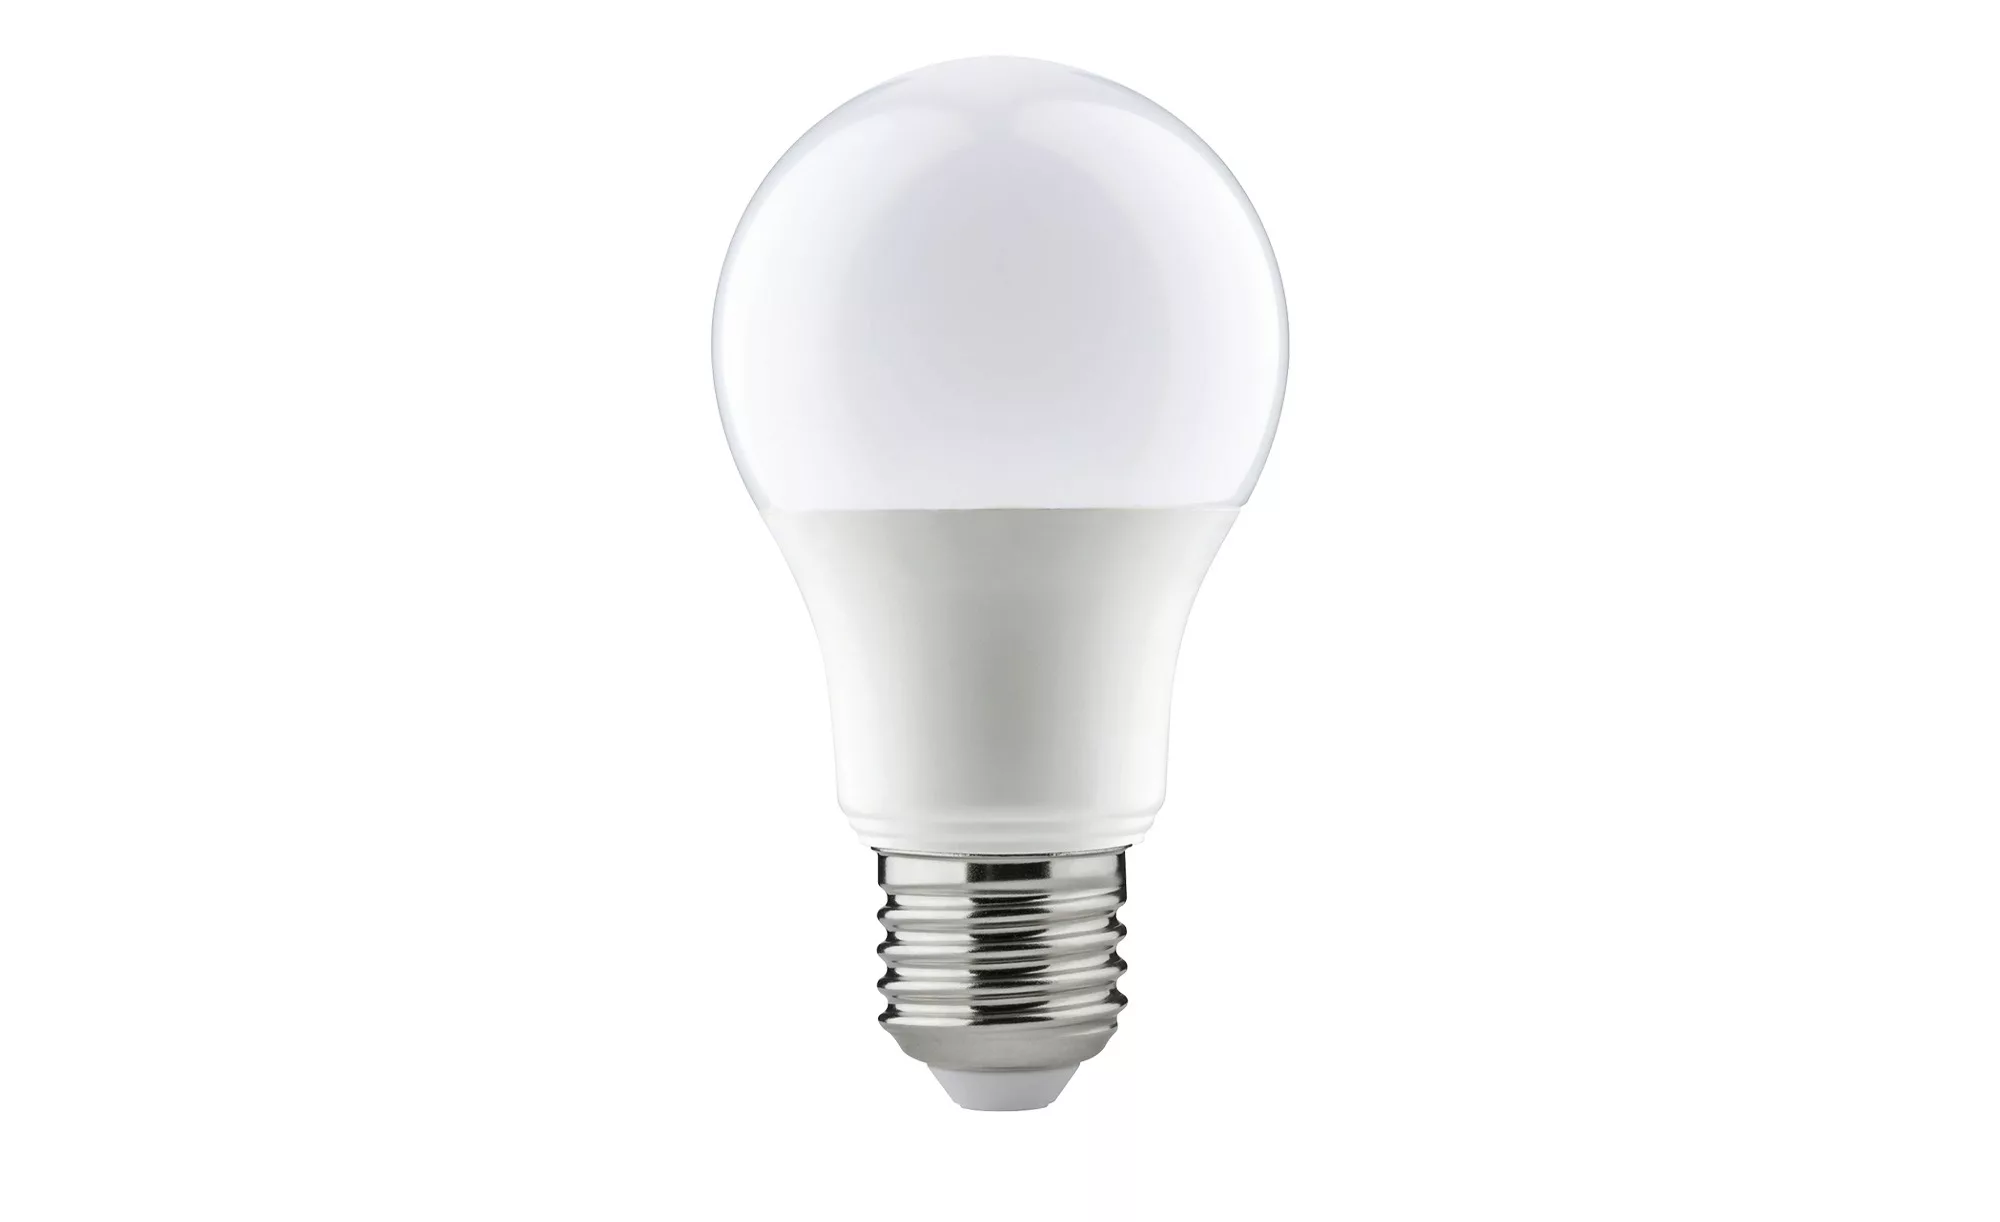 LED 3-er Pack, AGL E27 9W, 806lm, 2700K - weiß - 11,2 cm - Lampen & Leuchte günstig online kaufen